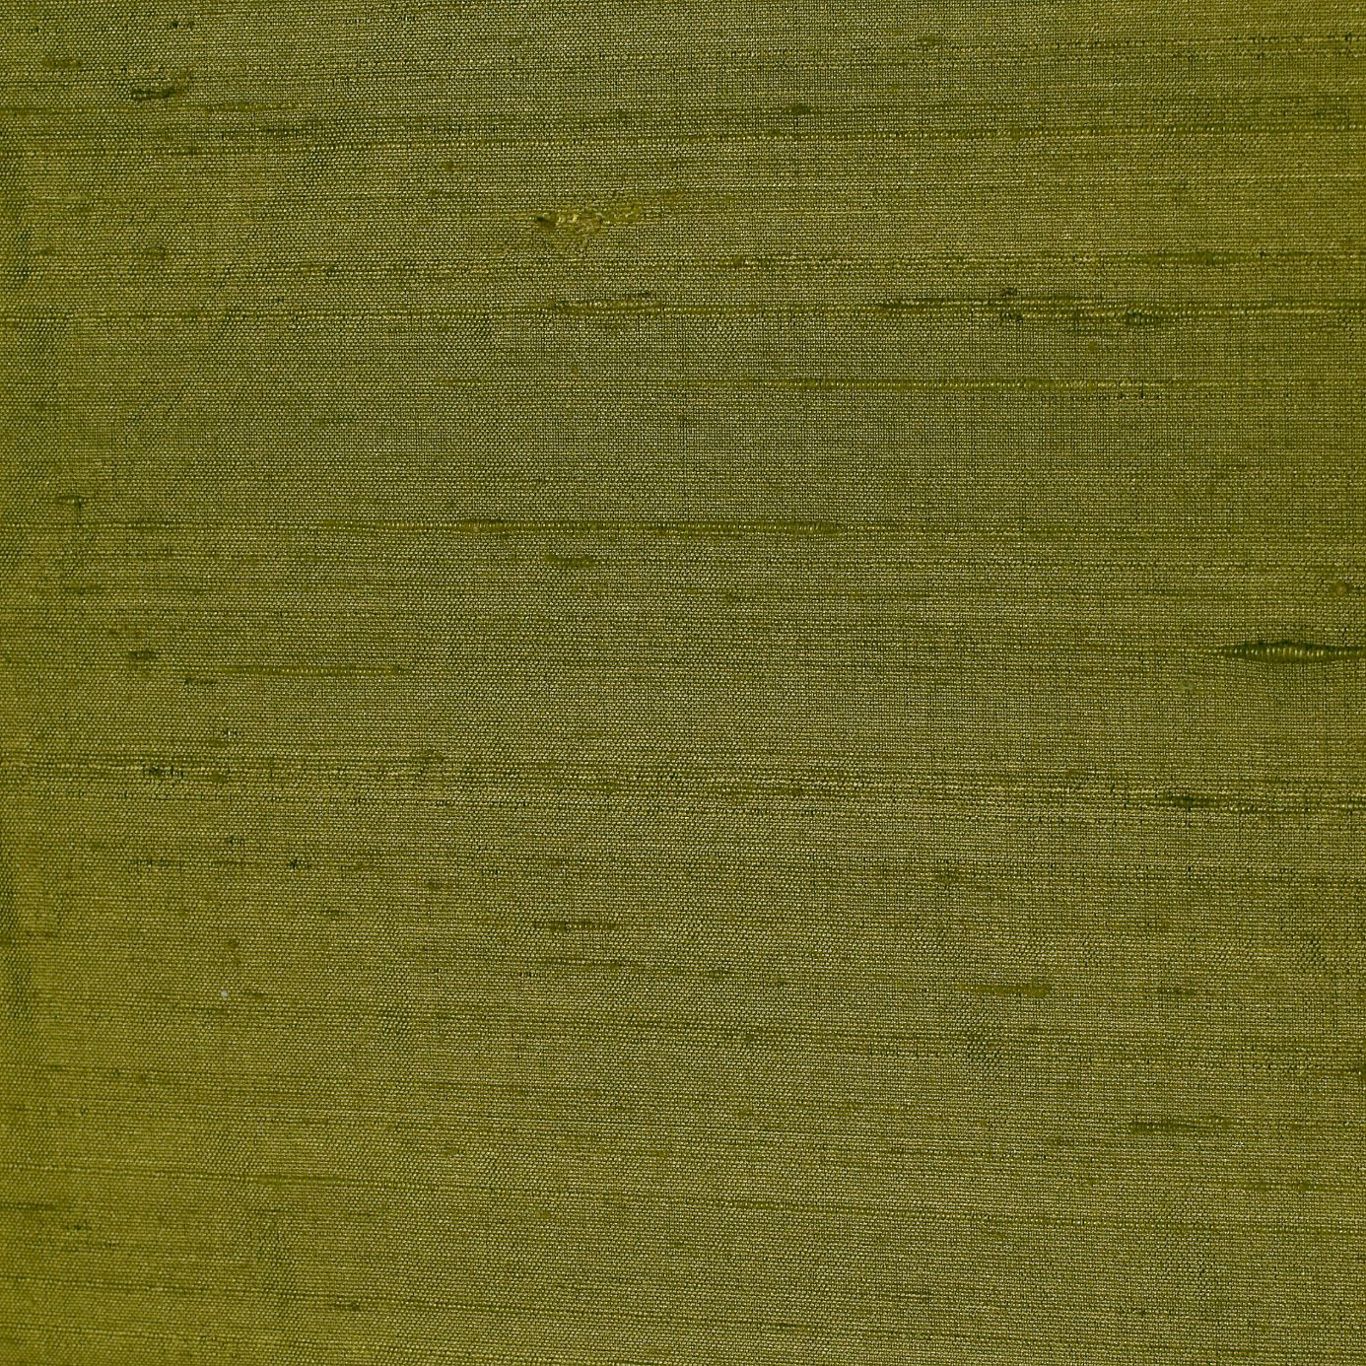 Lilaea Silks Avocado Fabric by HAR